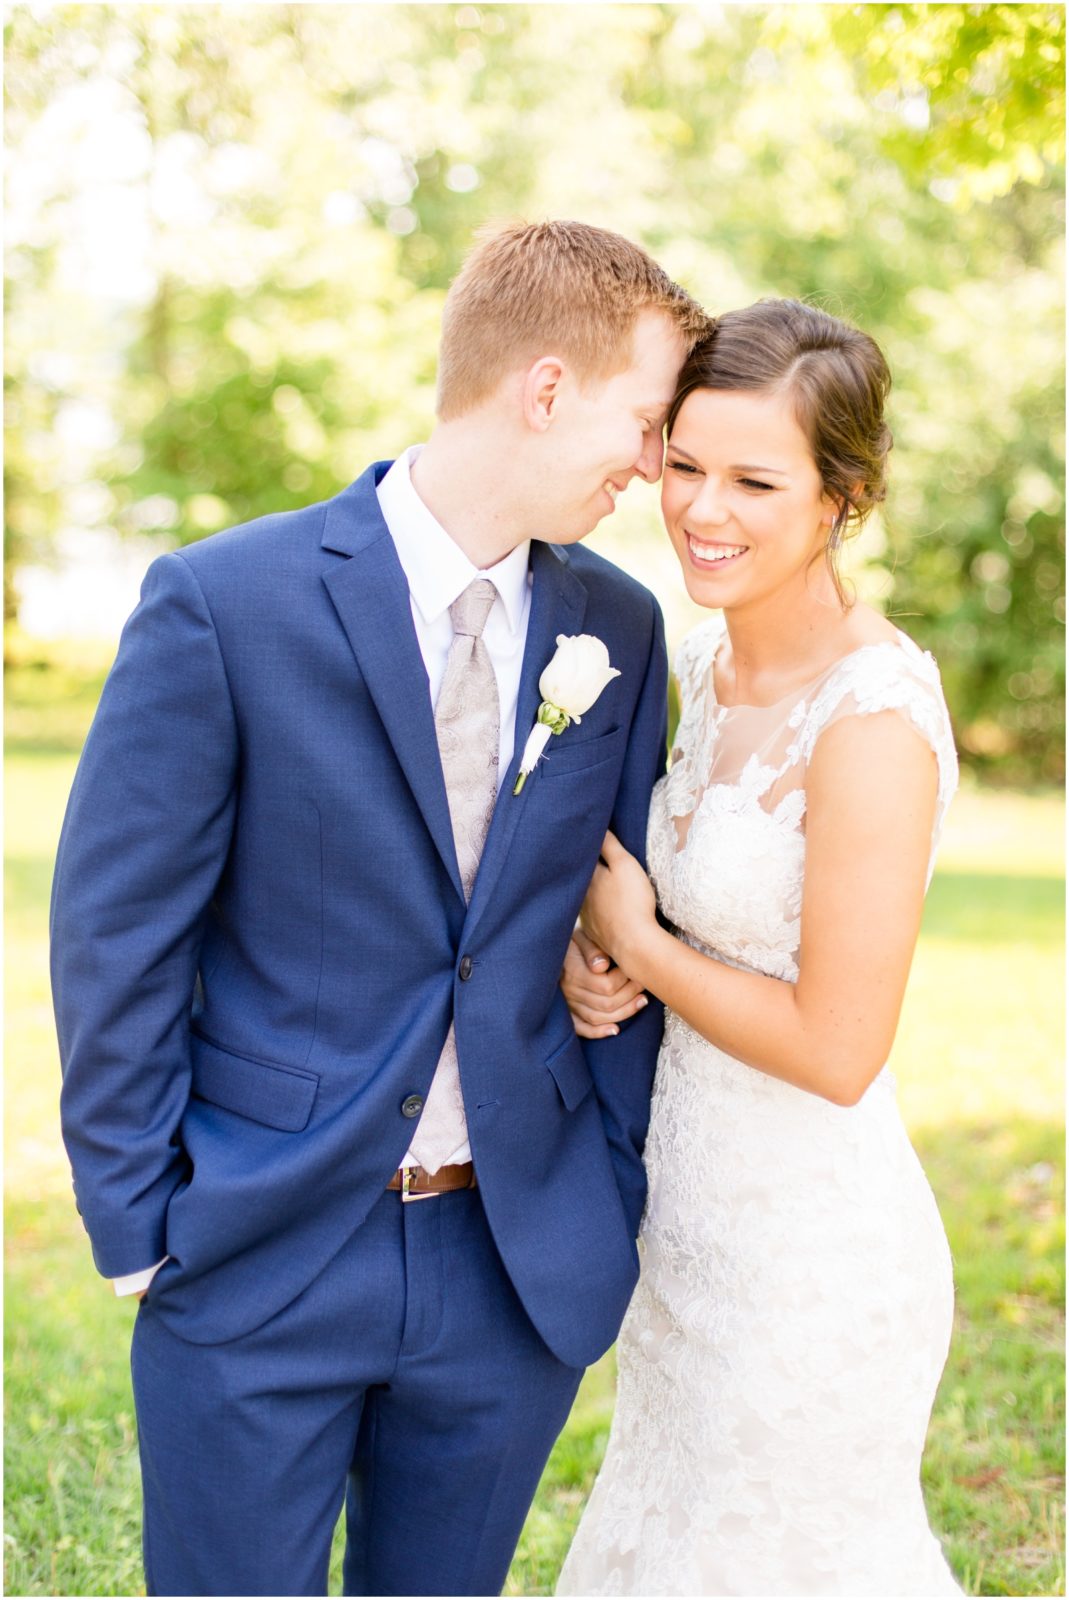 Jonna + Heath | Dover, TN Spring Wedding | lindseybrownphotography.com